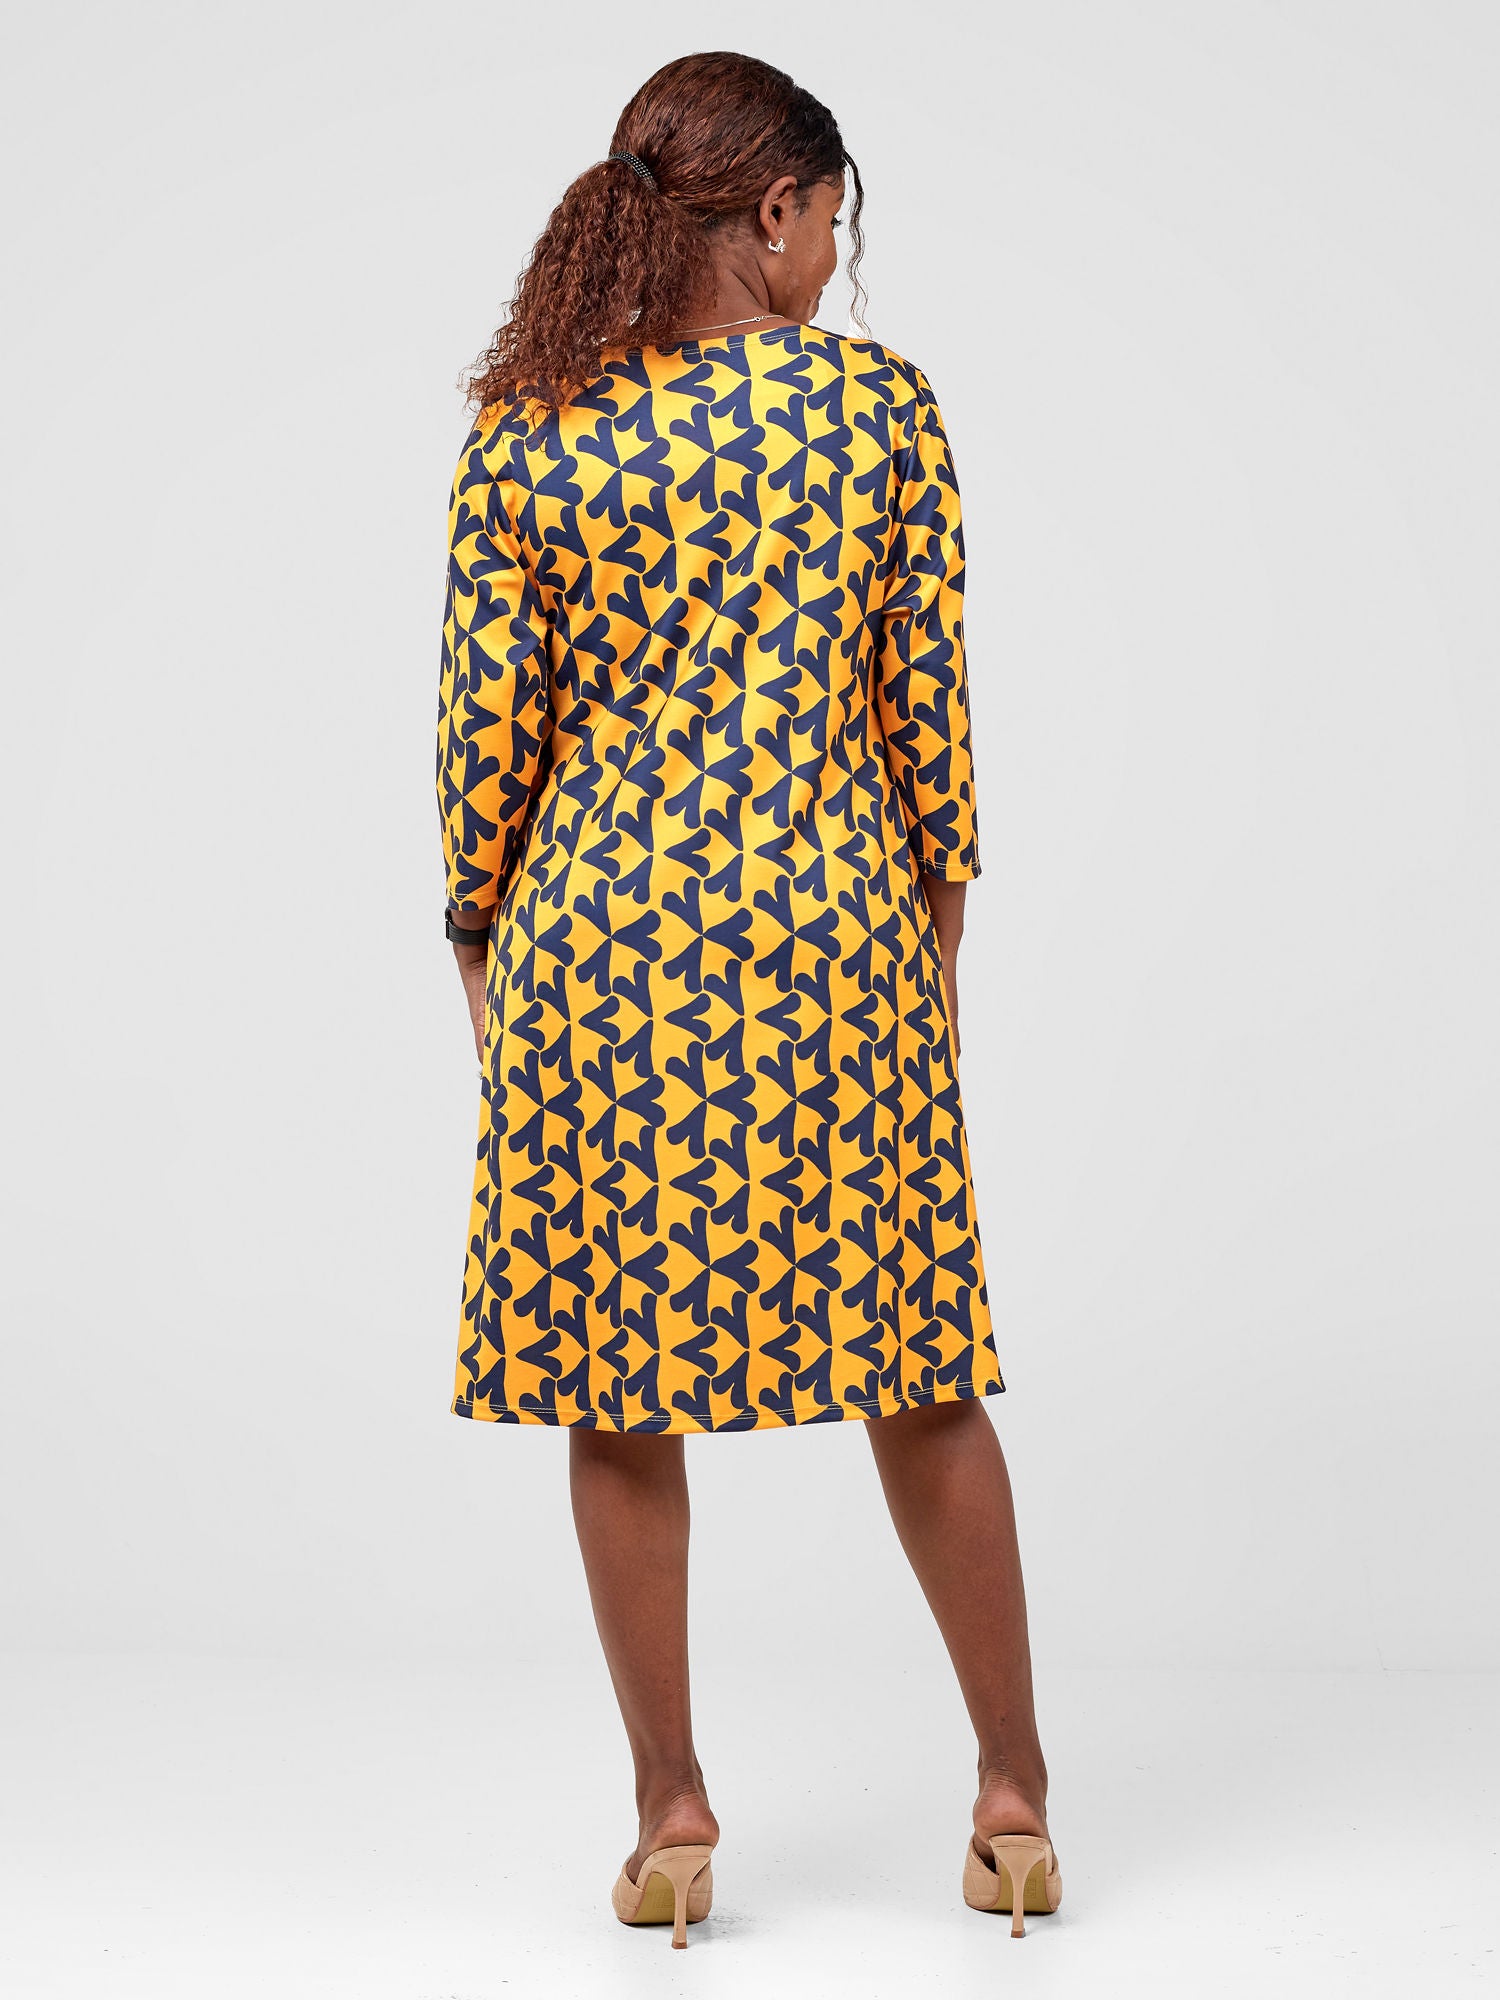 Vivo Tatili 3/4 Sleeve A Line Dress - Mustard / Navy Zawi Print